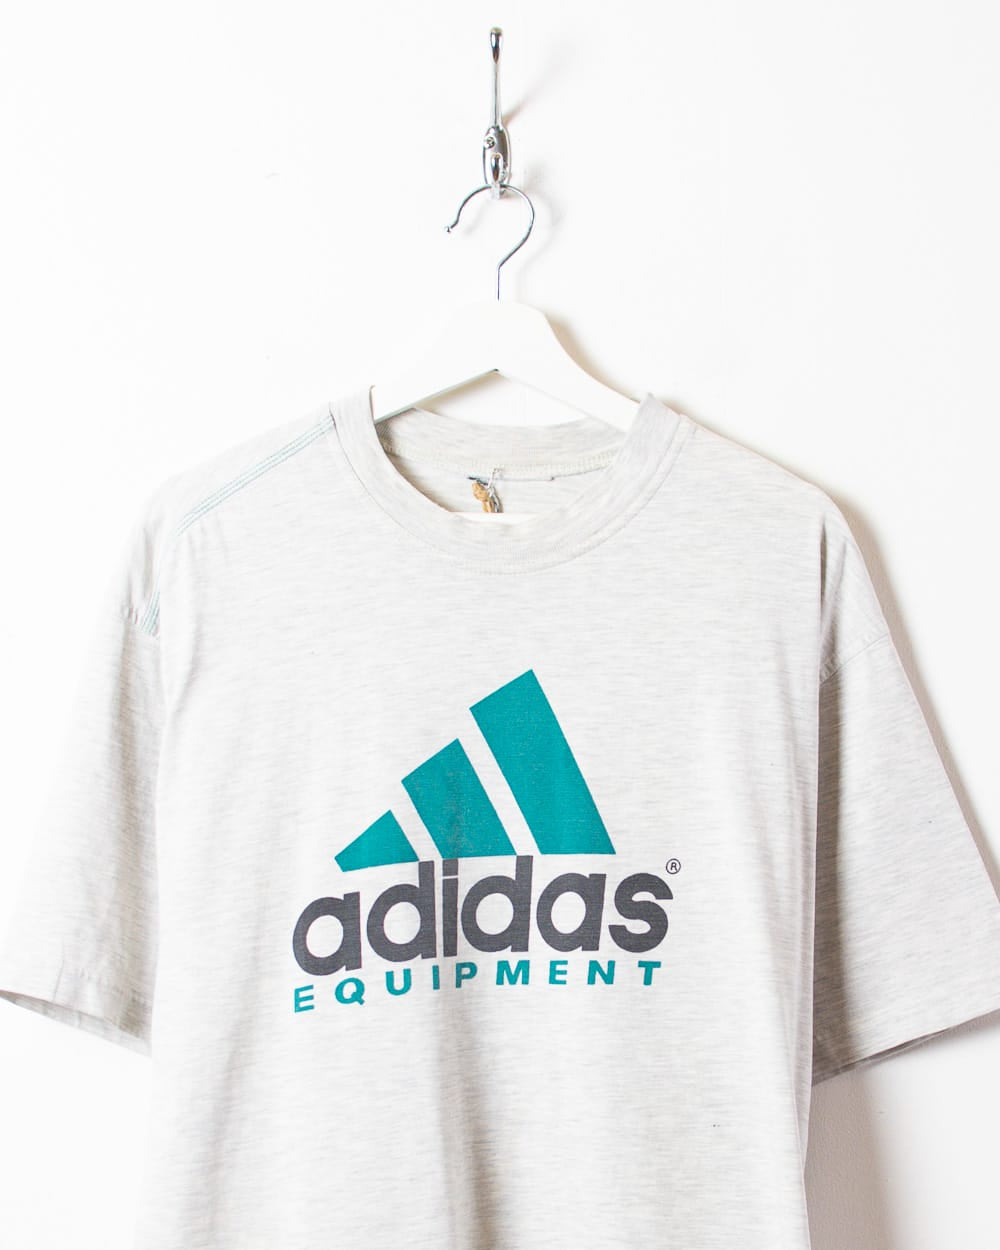 Stone Adidas Equipment T-Shirt - X-Large